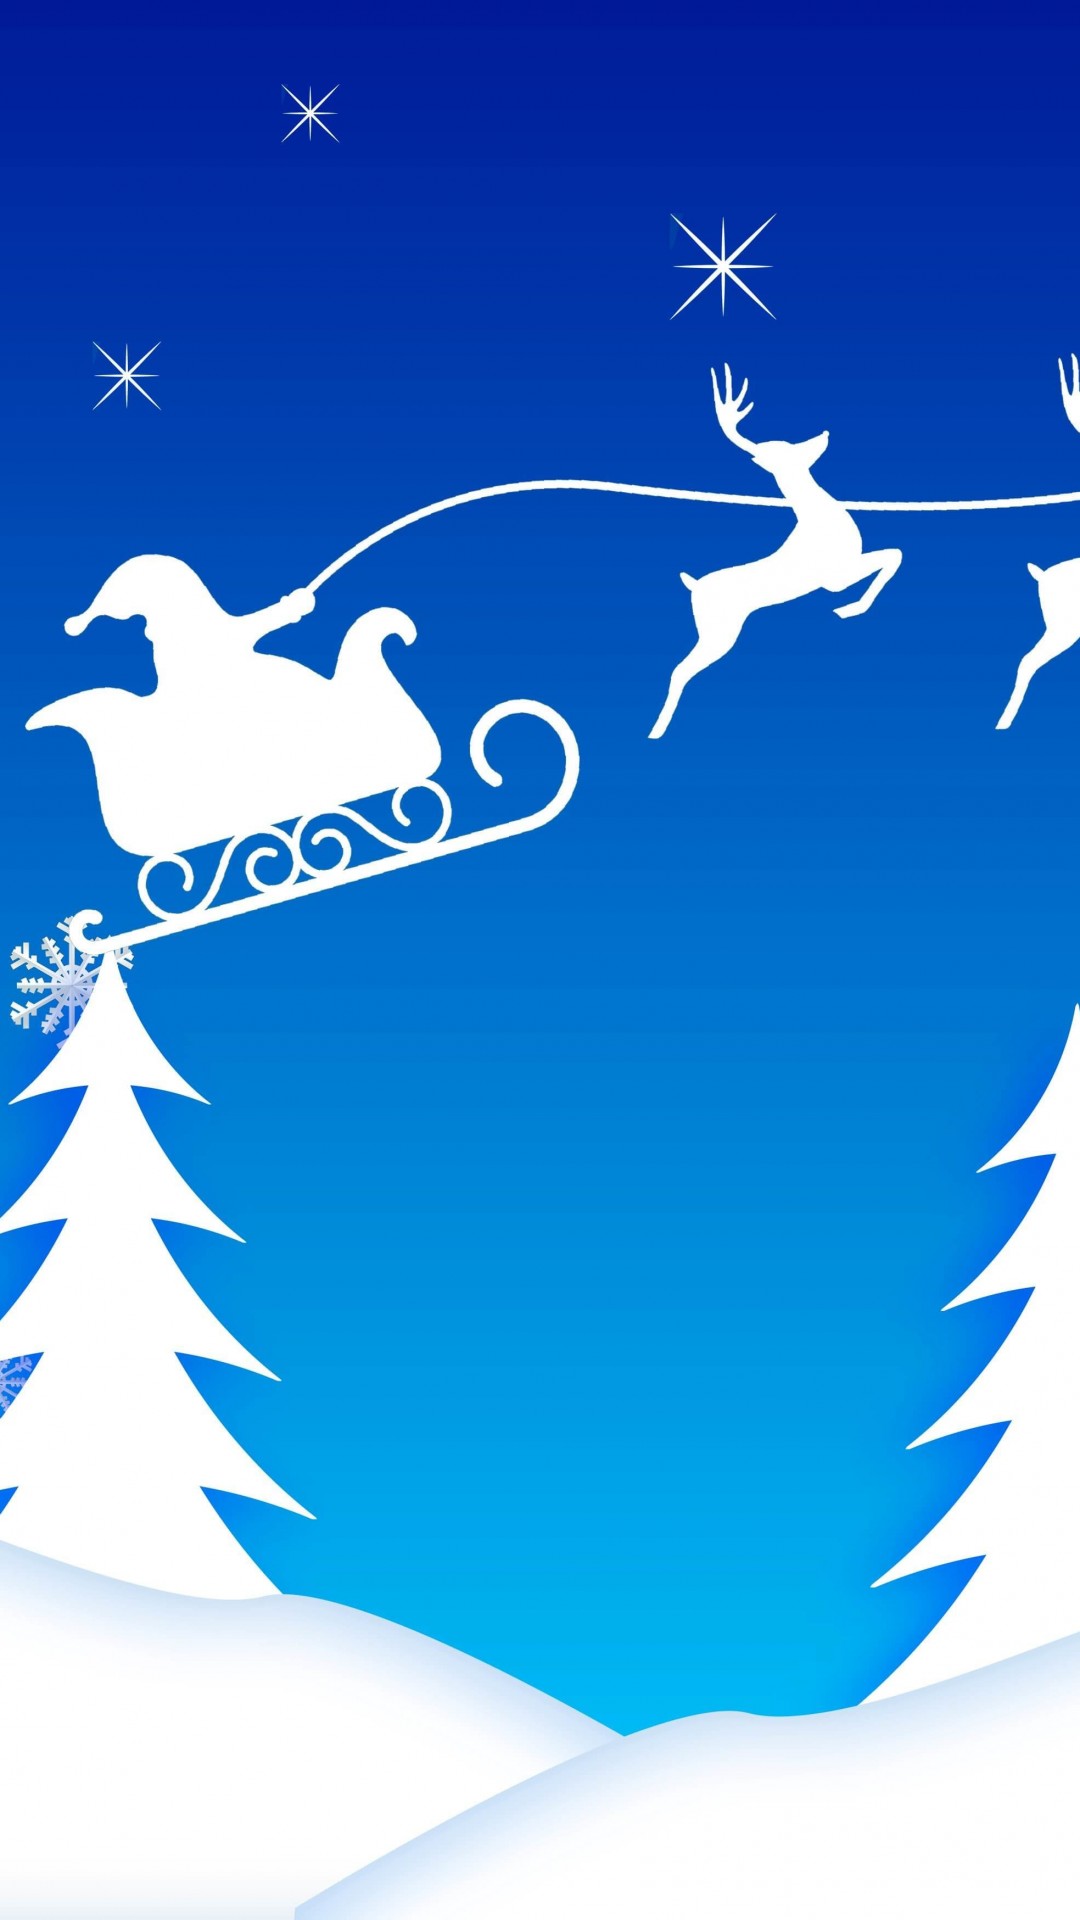 Santa’s Sleigh Illustration Wallpaper for SAMSUNG Galaxy S4